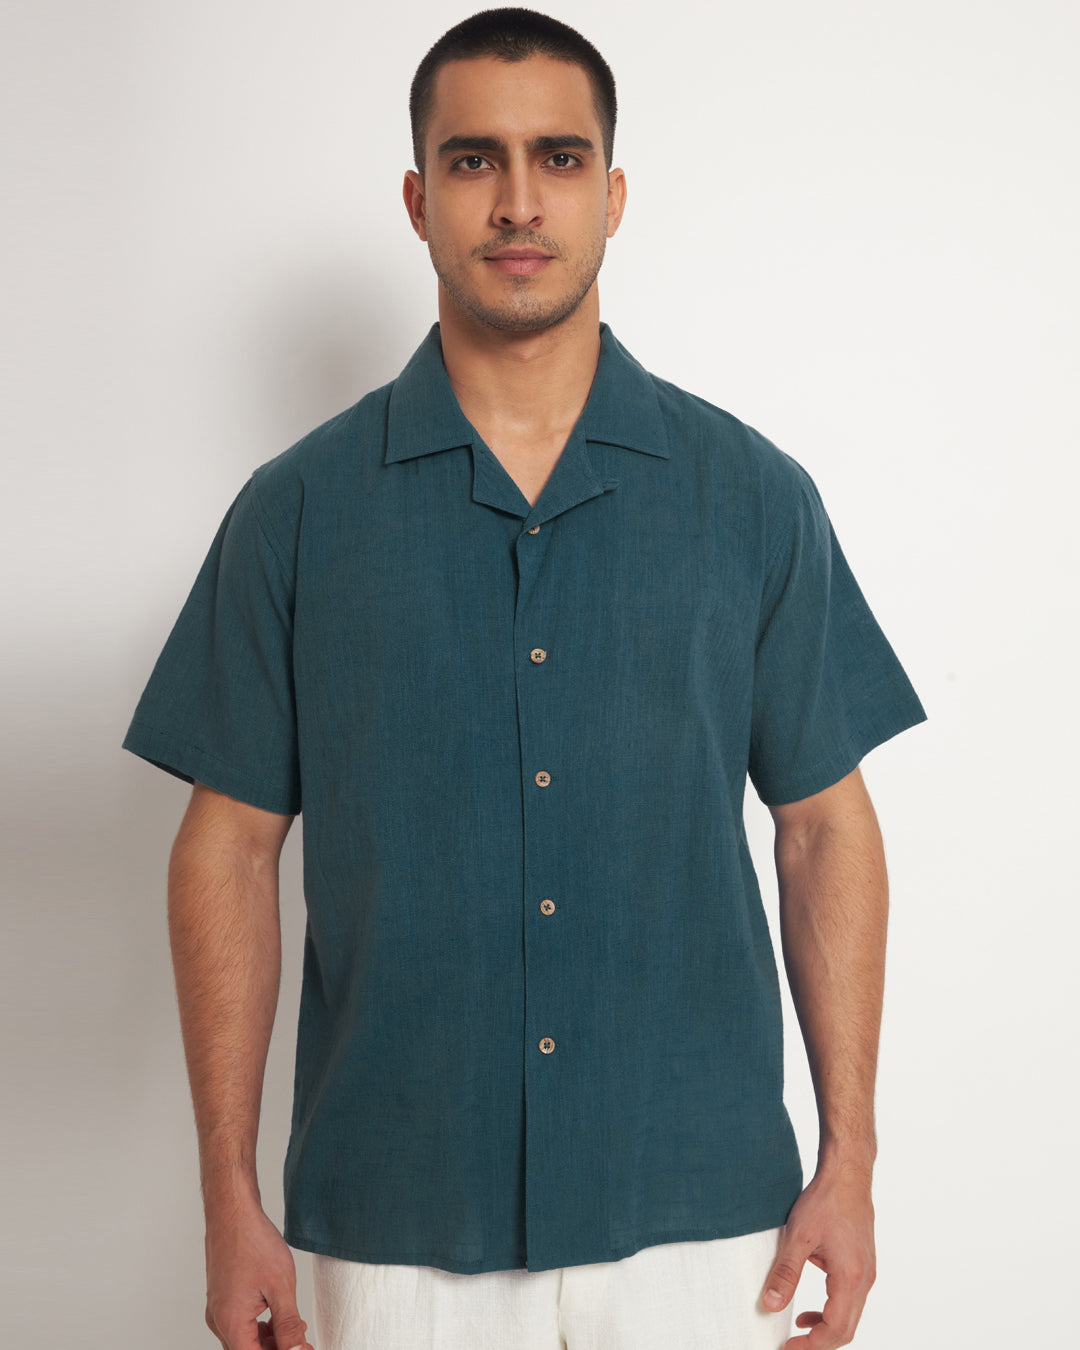 Classic Deep Teal Men's Half Sleeves Shirt